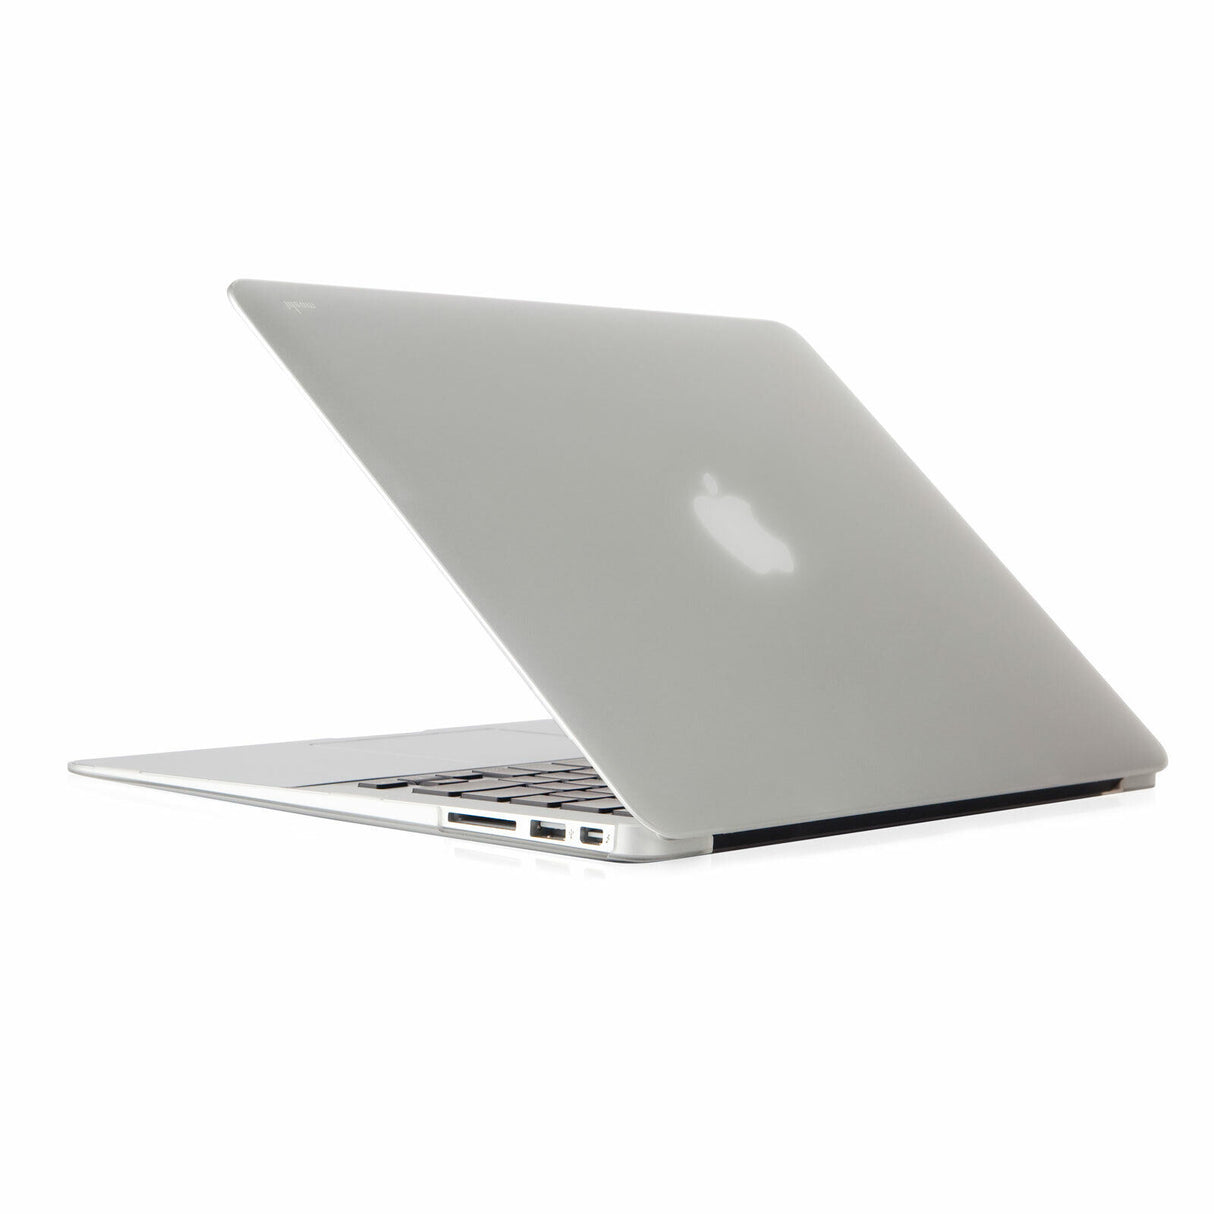 Apple A1466 MacBook Air 2012 13" i5-3427U @1.8 4GB RAM 256GB SSD MacOS Catalina